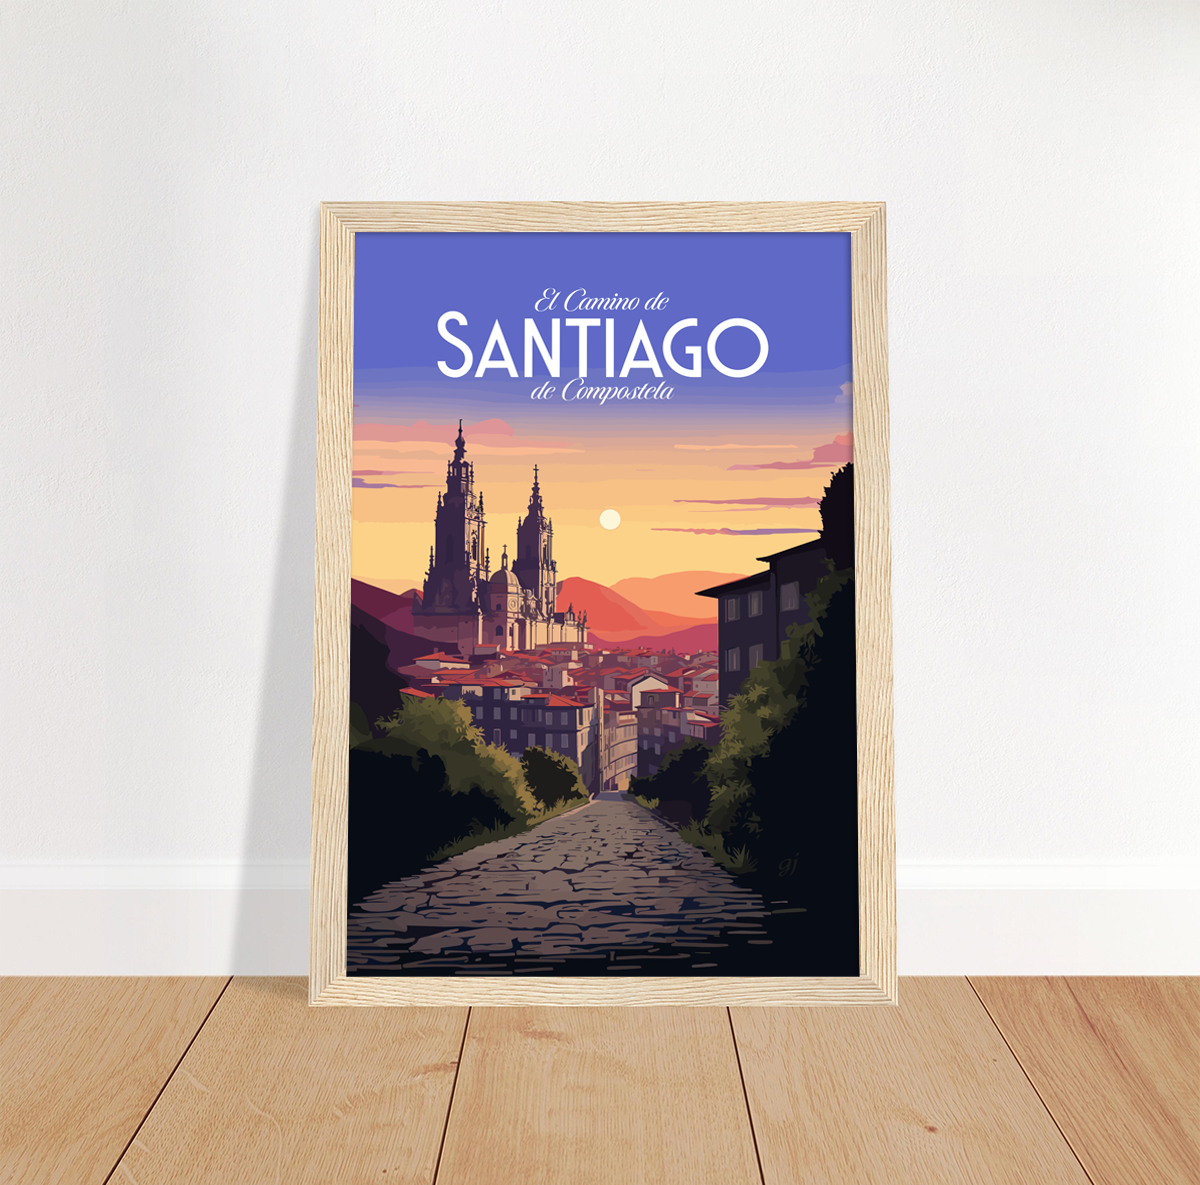 Santiago de Compostela poster by bon voyage design